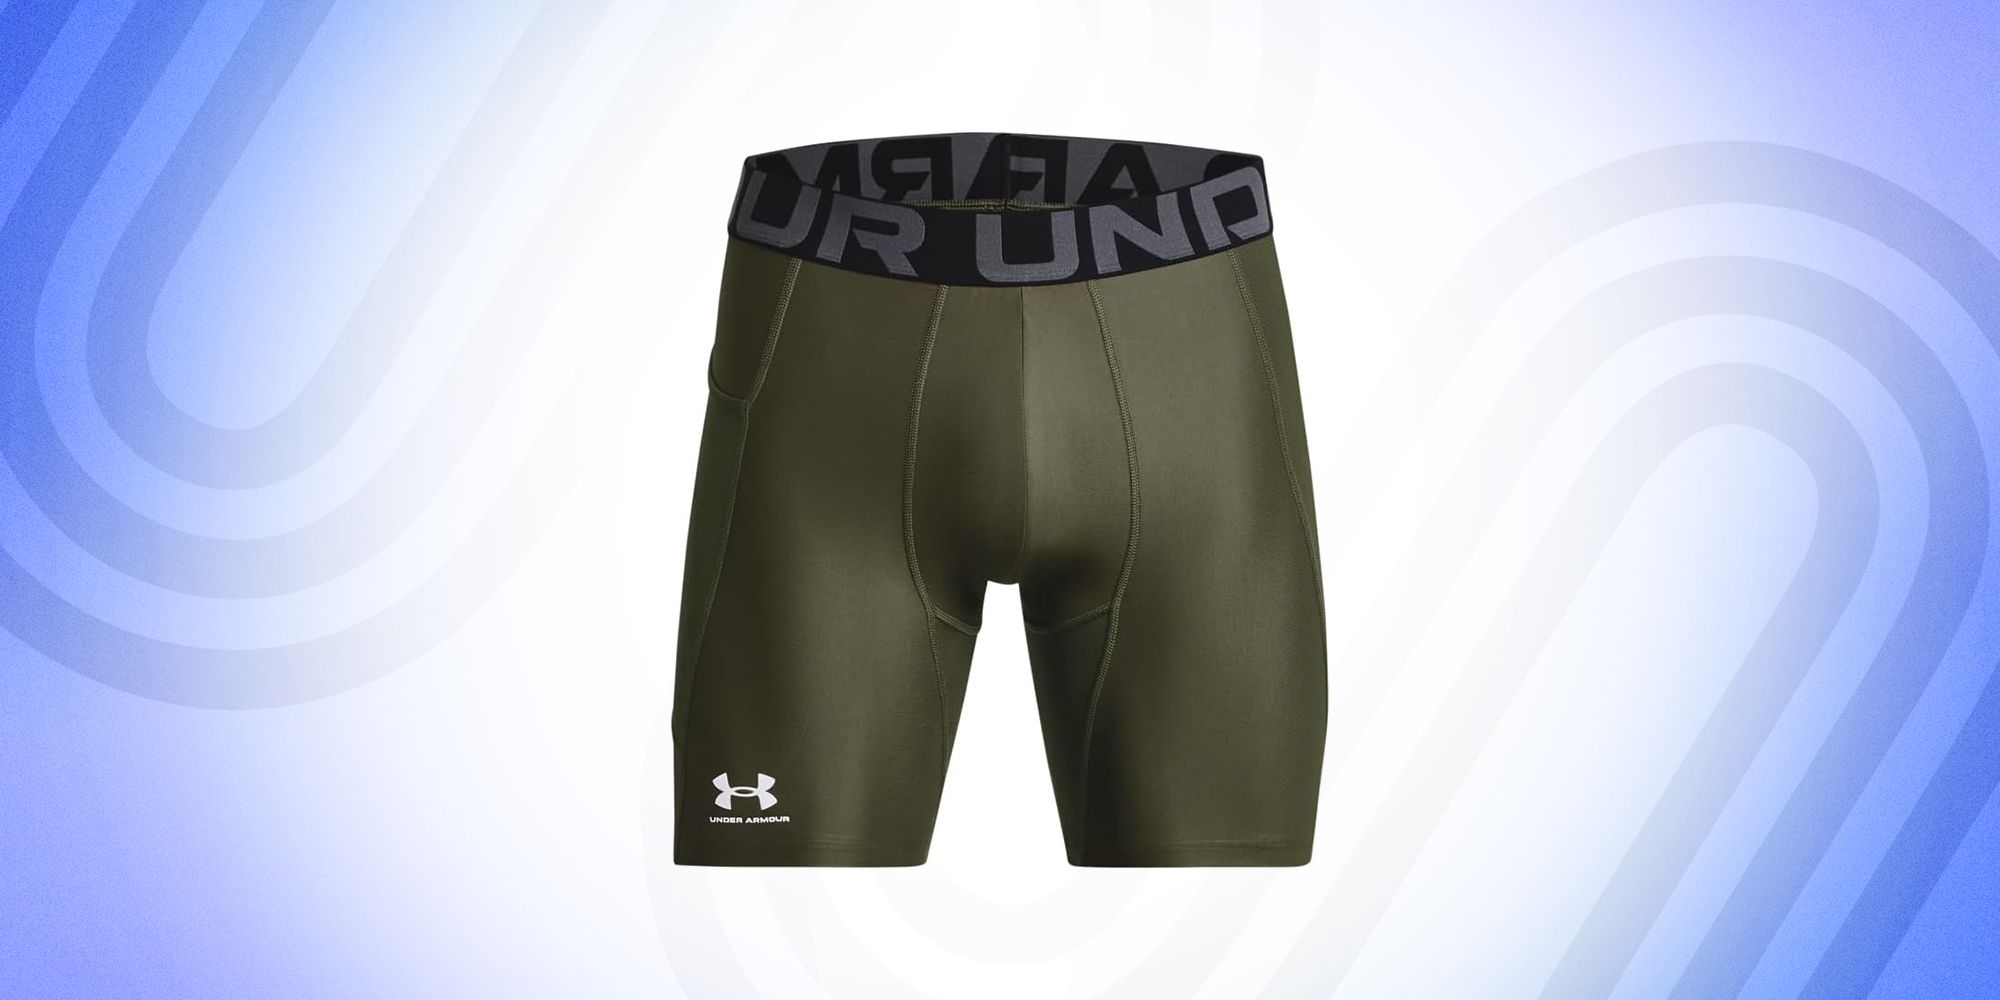 Nike Pro Combat Padded Compression Shorts Men's Black Used S